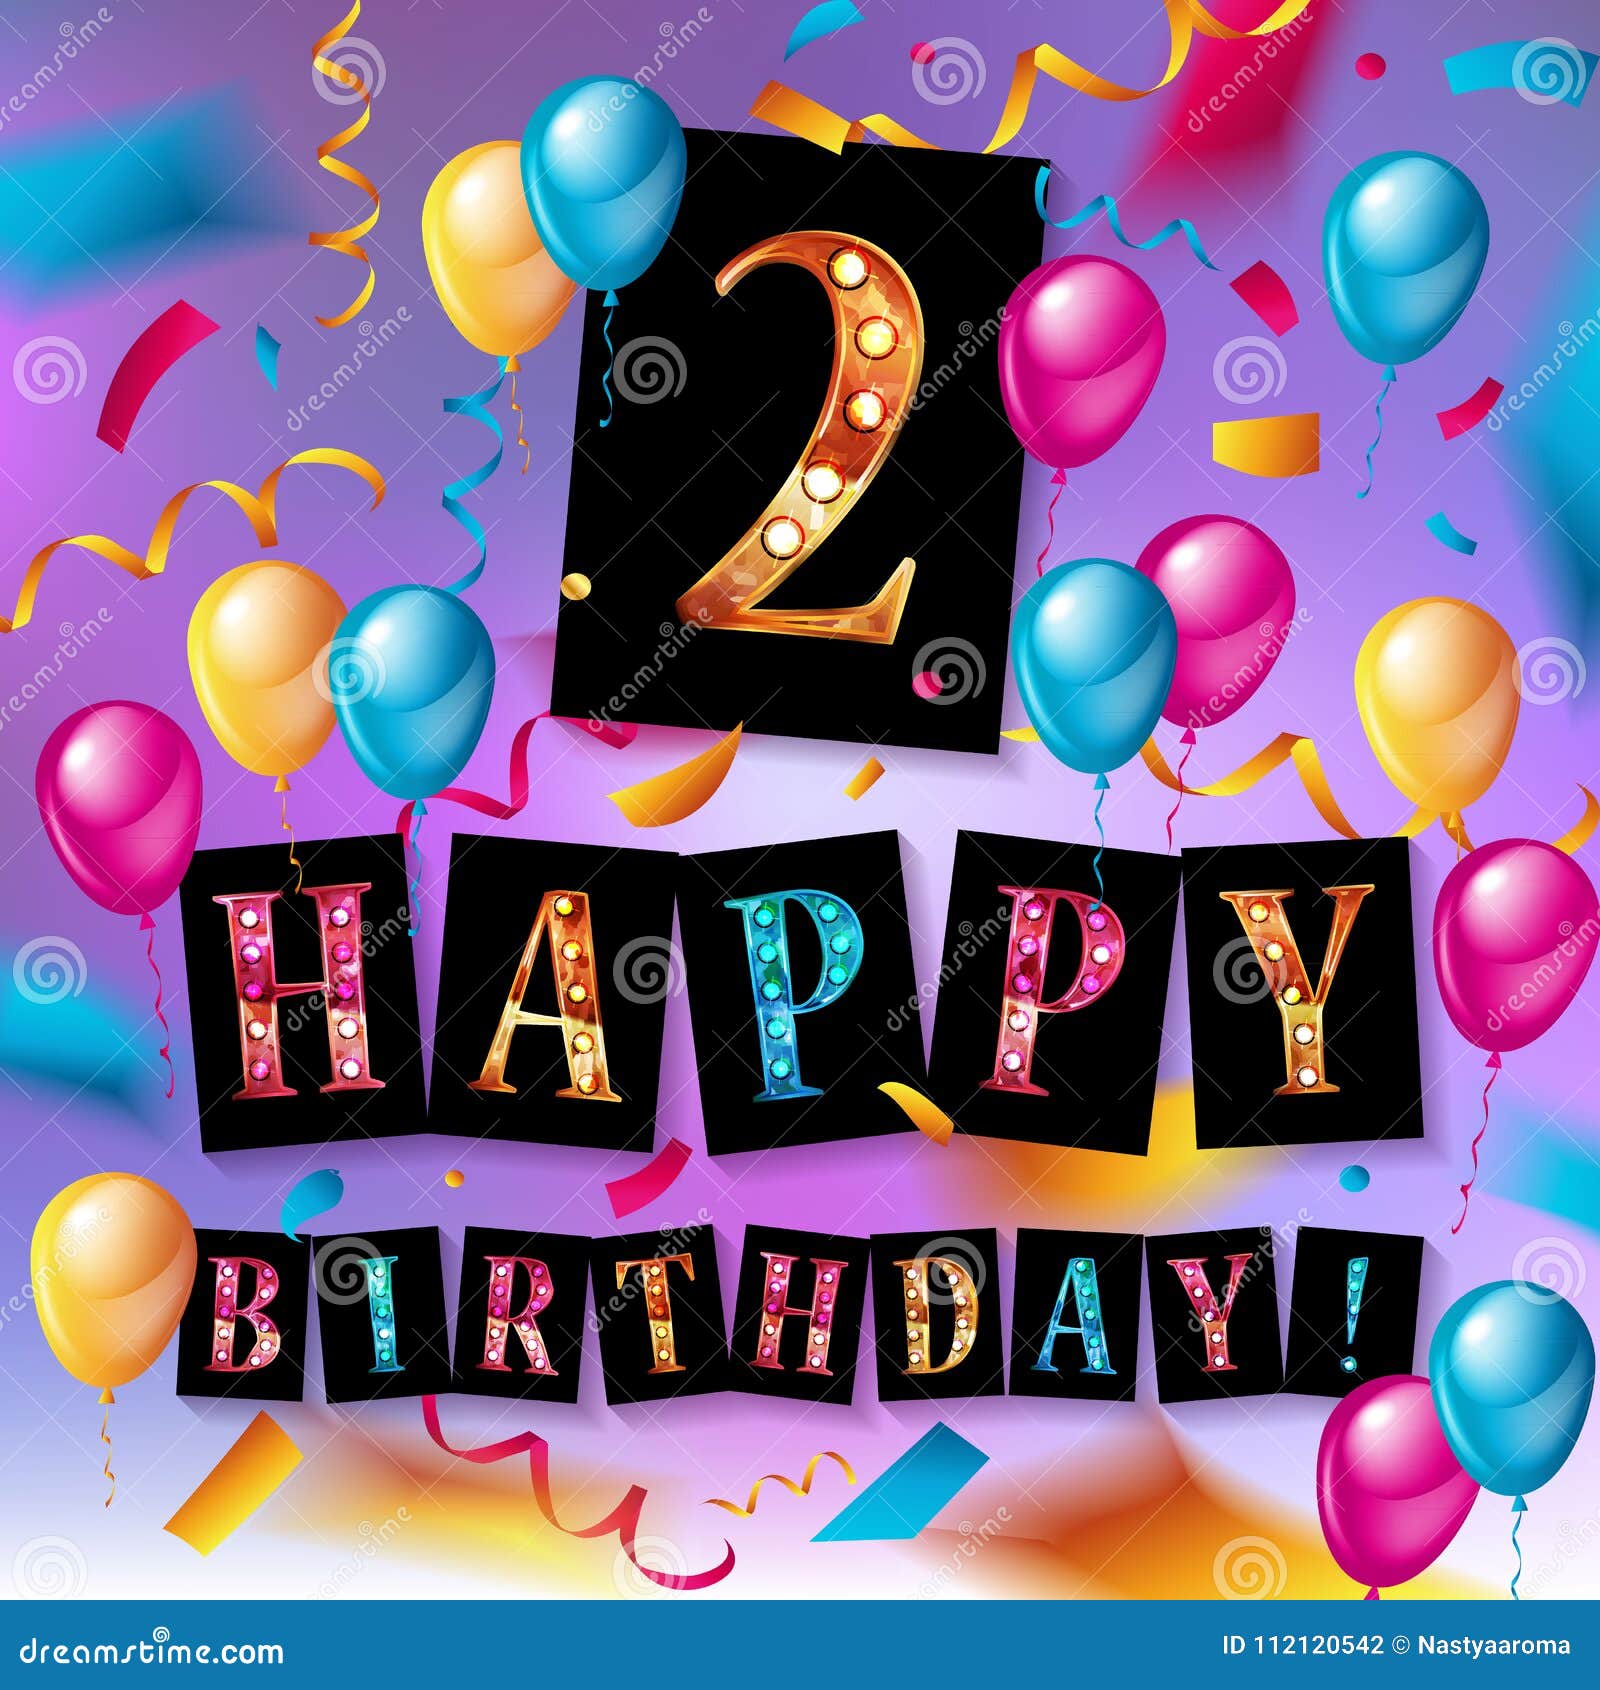 2nd Birthday Celebration Greeting Card Design Stock Illustration -  Illustration of gift, design: 112120542